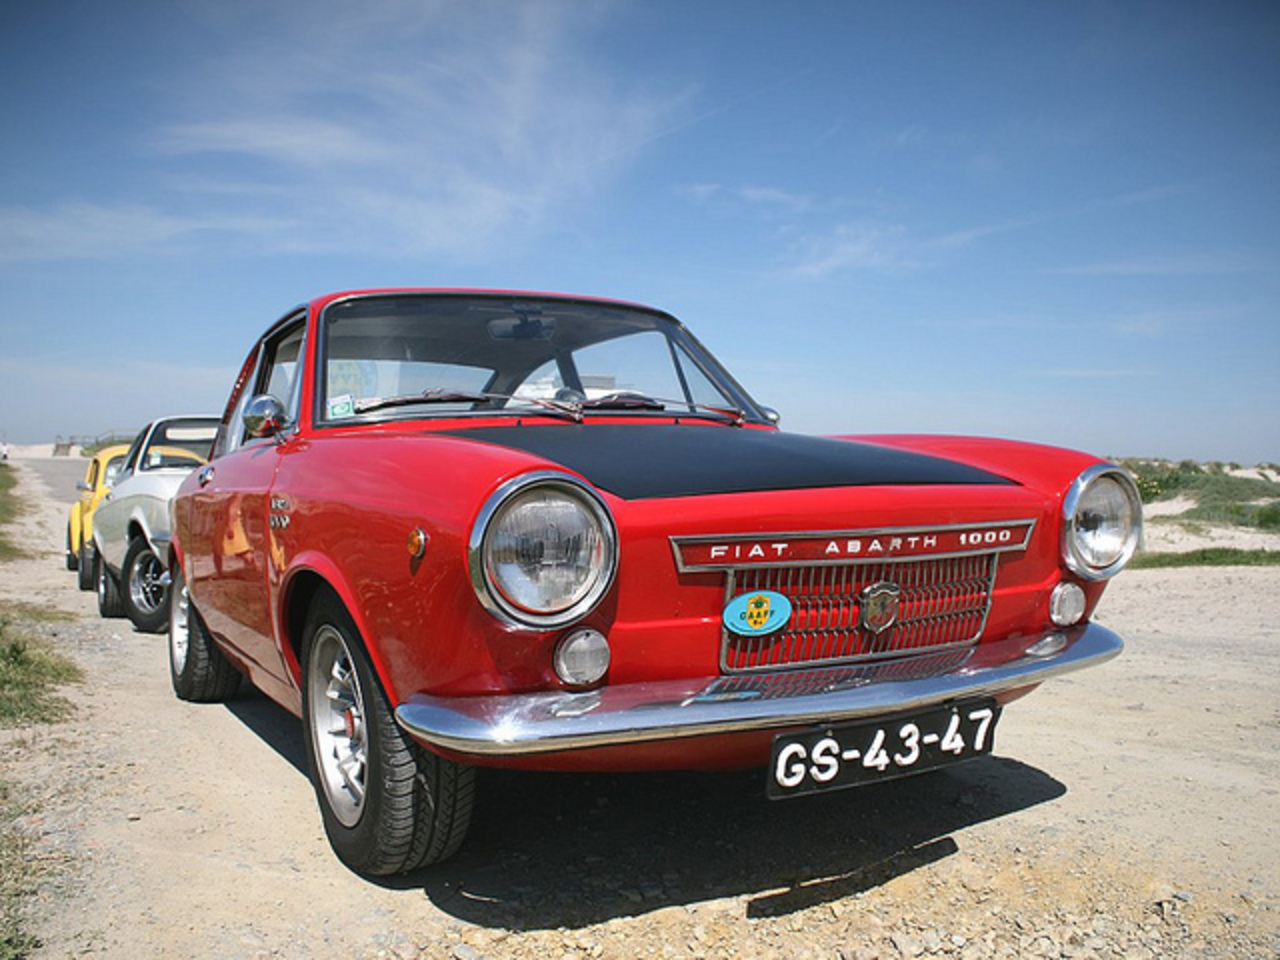 Fiat Abarth OT 1000 | Flickr - Photo Sharing!